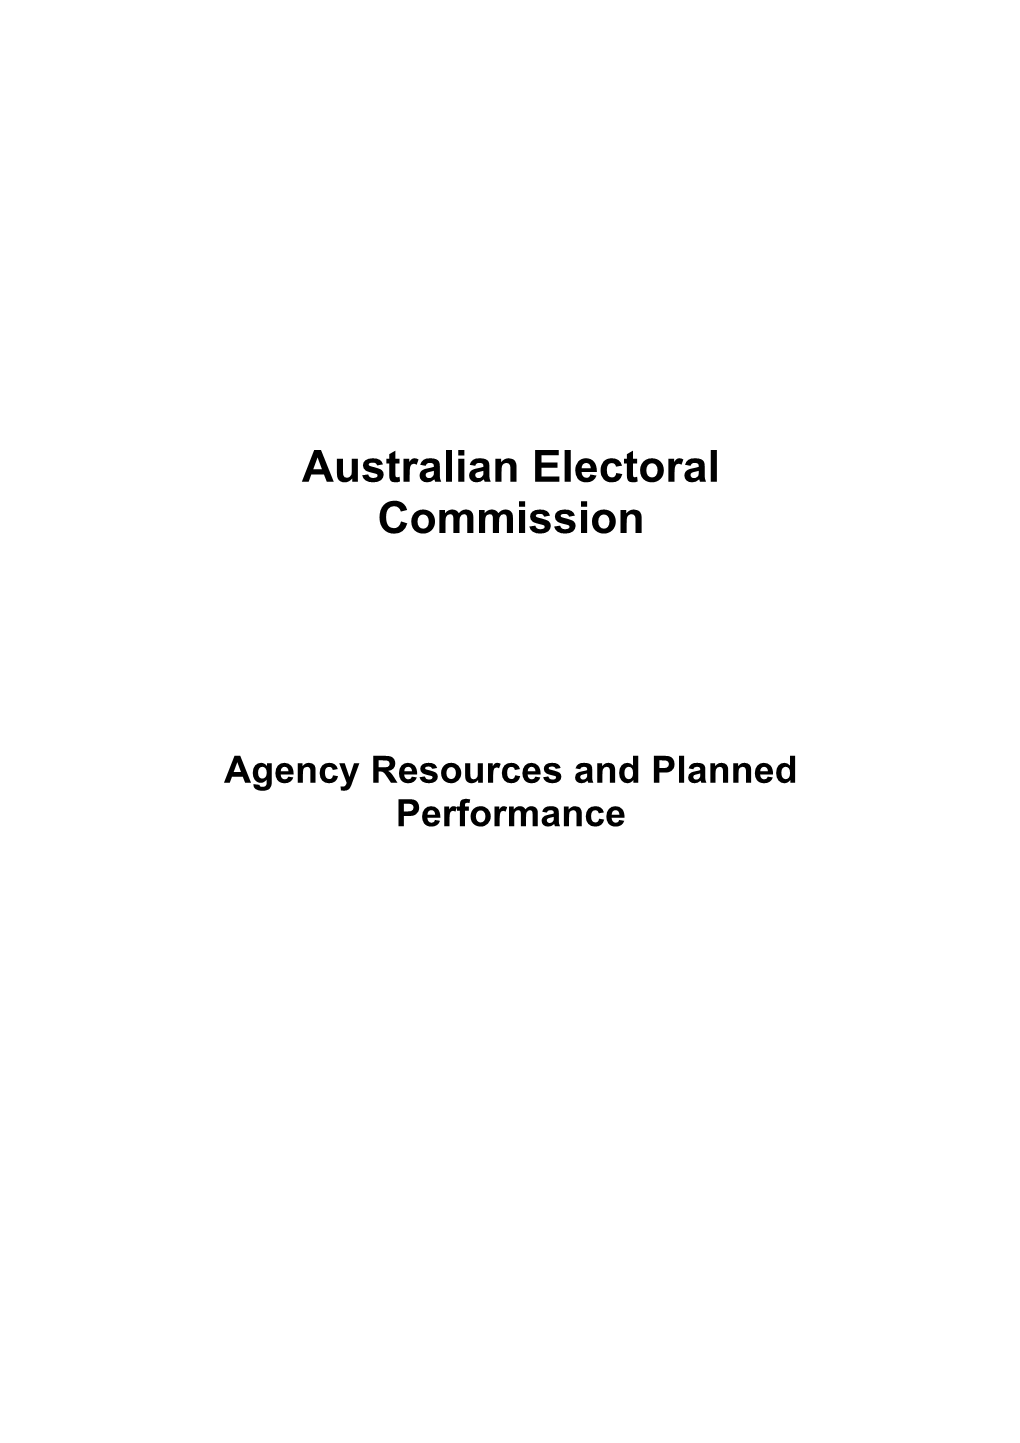 Portfolio Budget Statements 2012-13 - Australian Electoral Commission